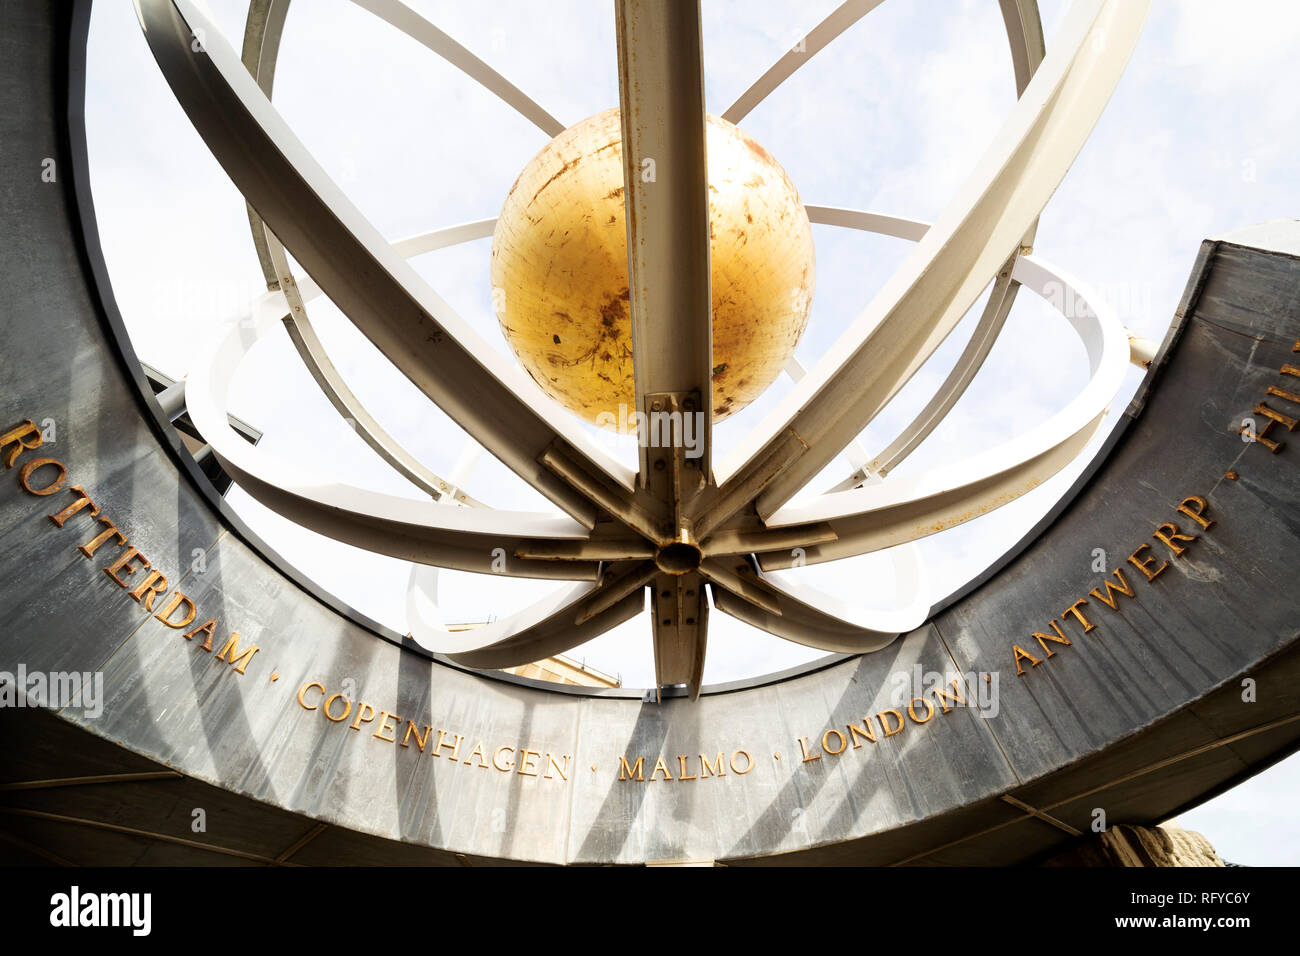 Die Golden Globe Denkmal auf dem Kai von Newcastle upon Tyne, England. Stockfoto